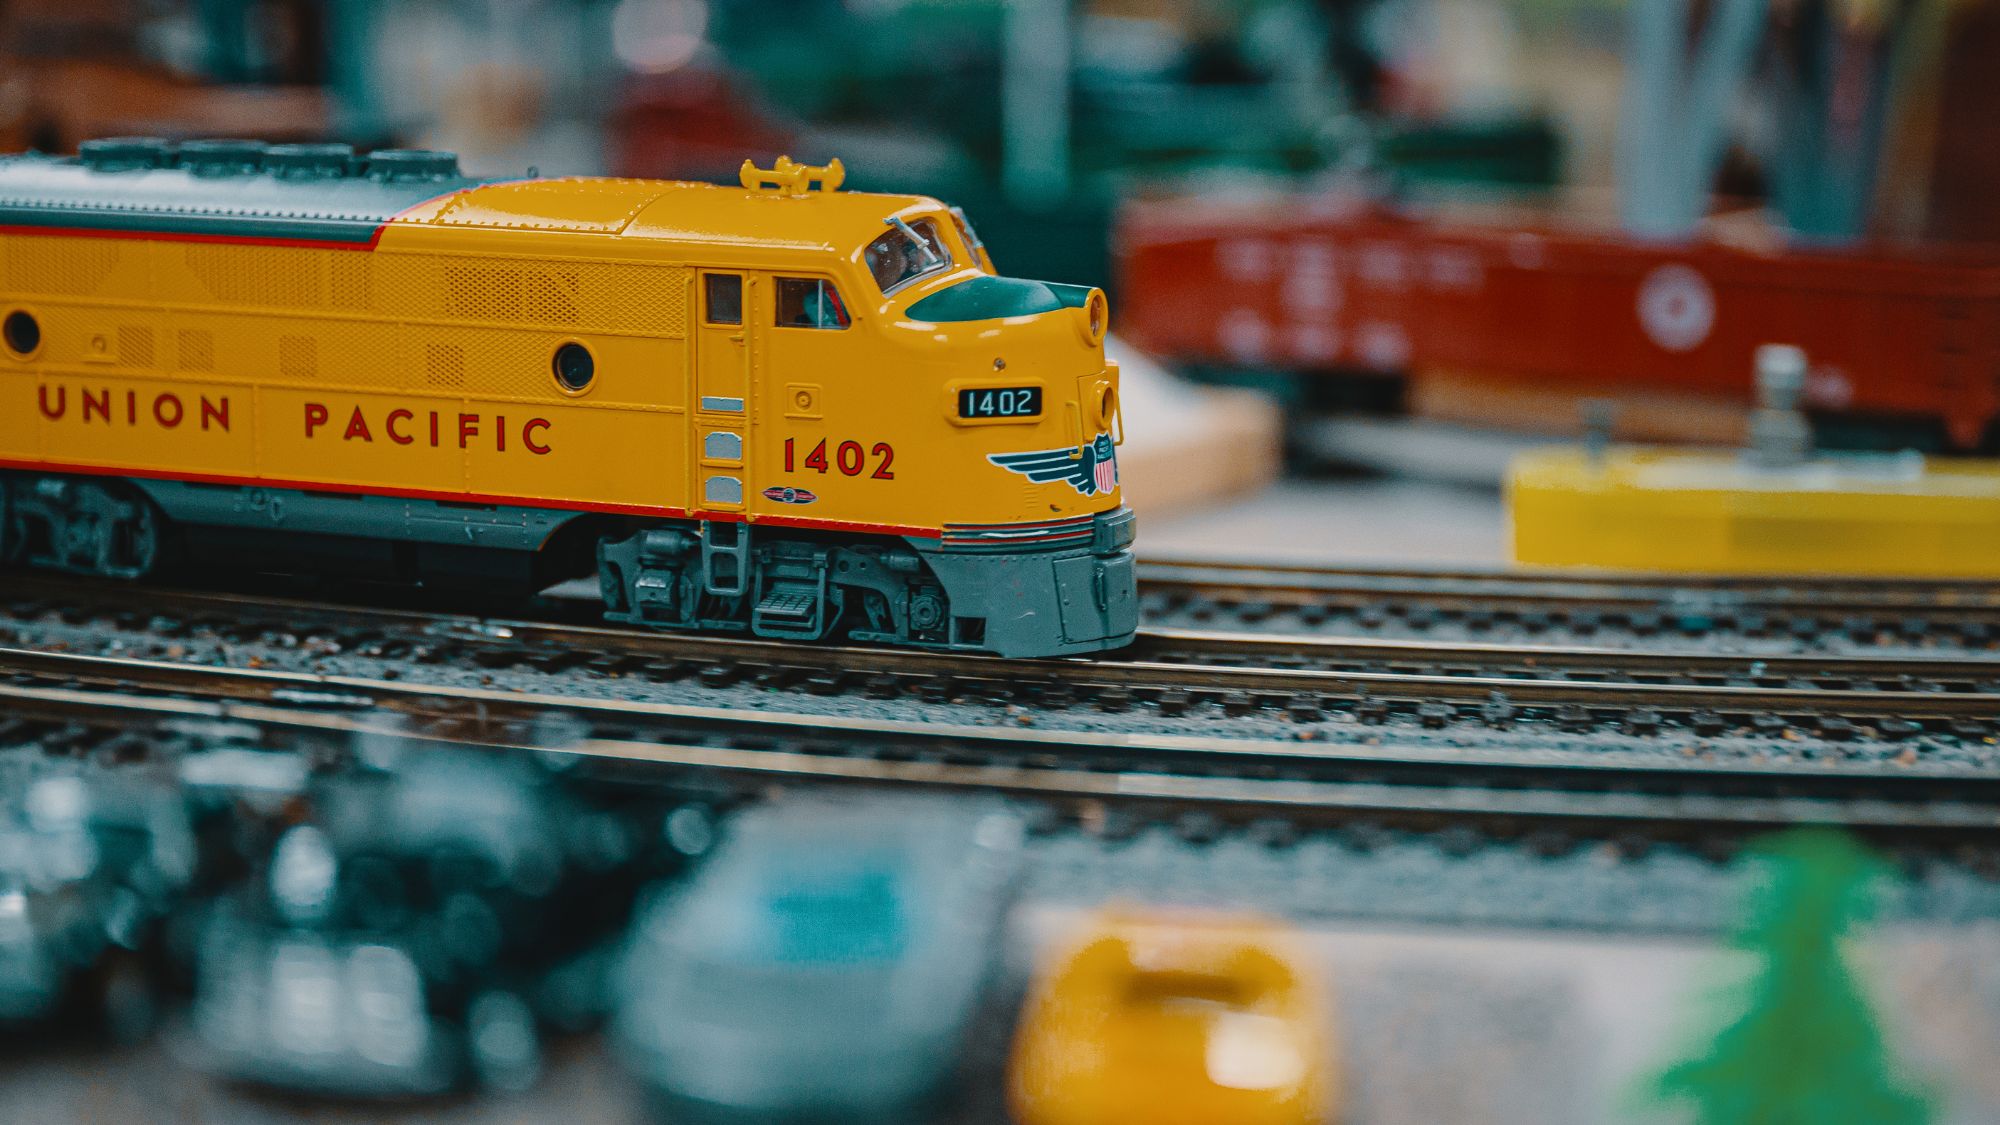 Union Pacific model train on track.